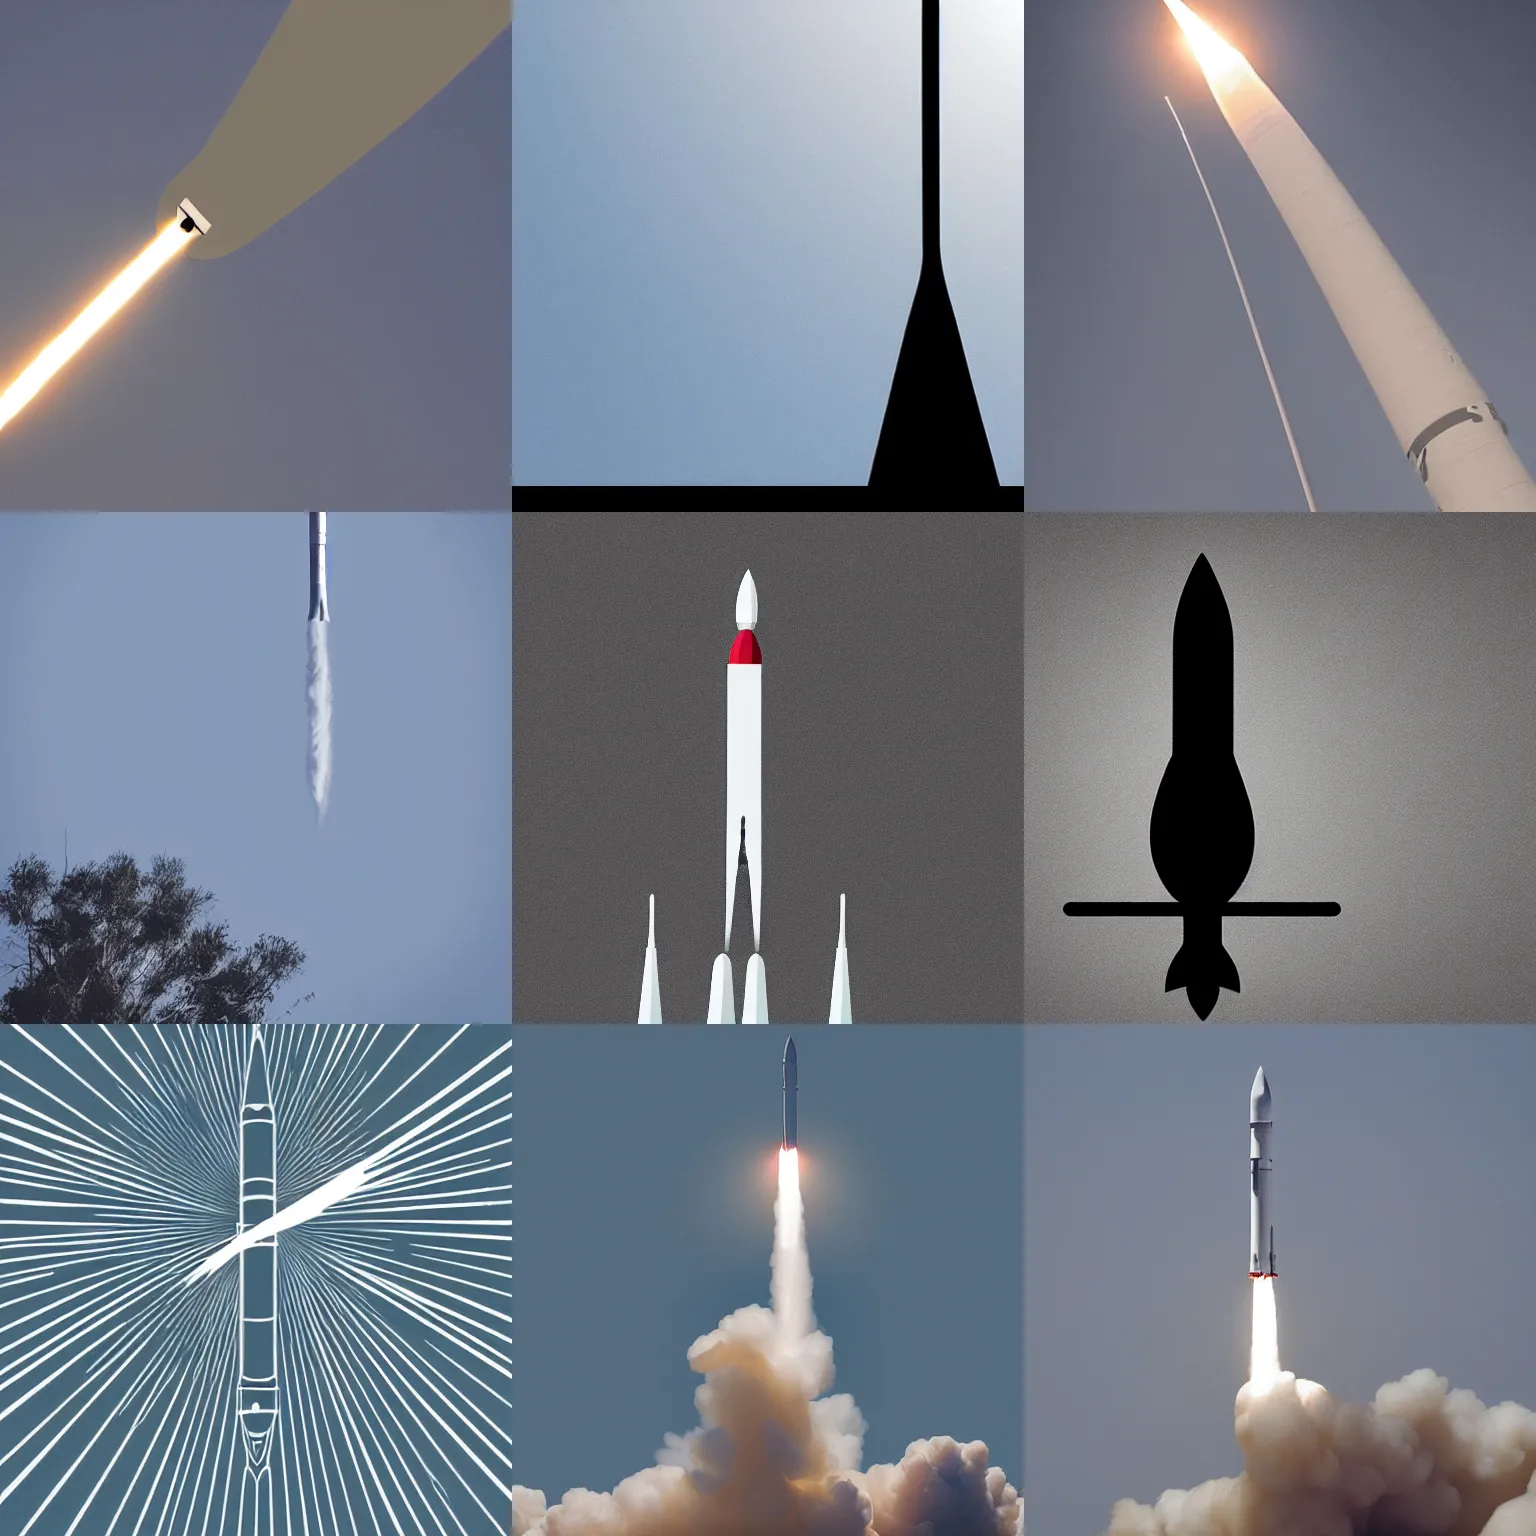 Prompt: Cool minimalist design depicting a rocket launch